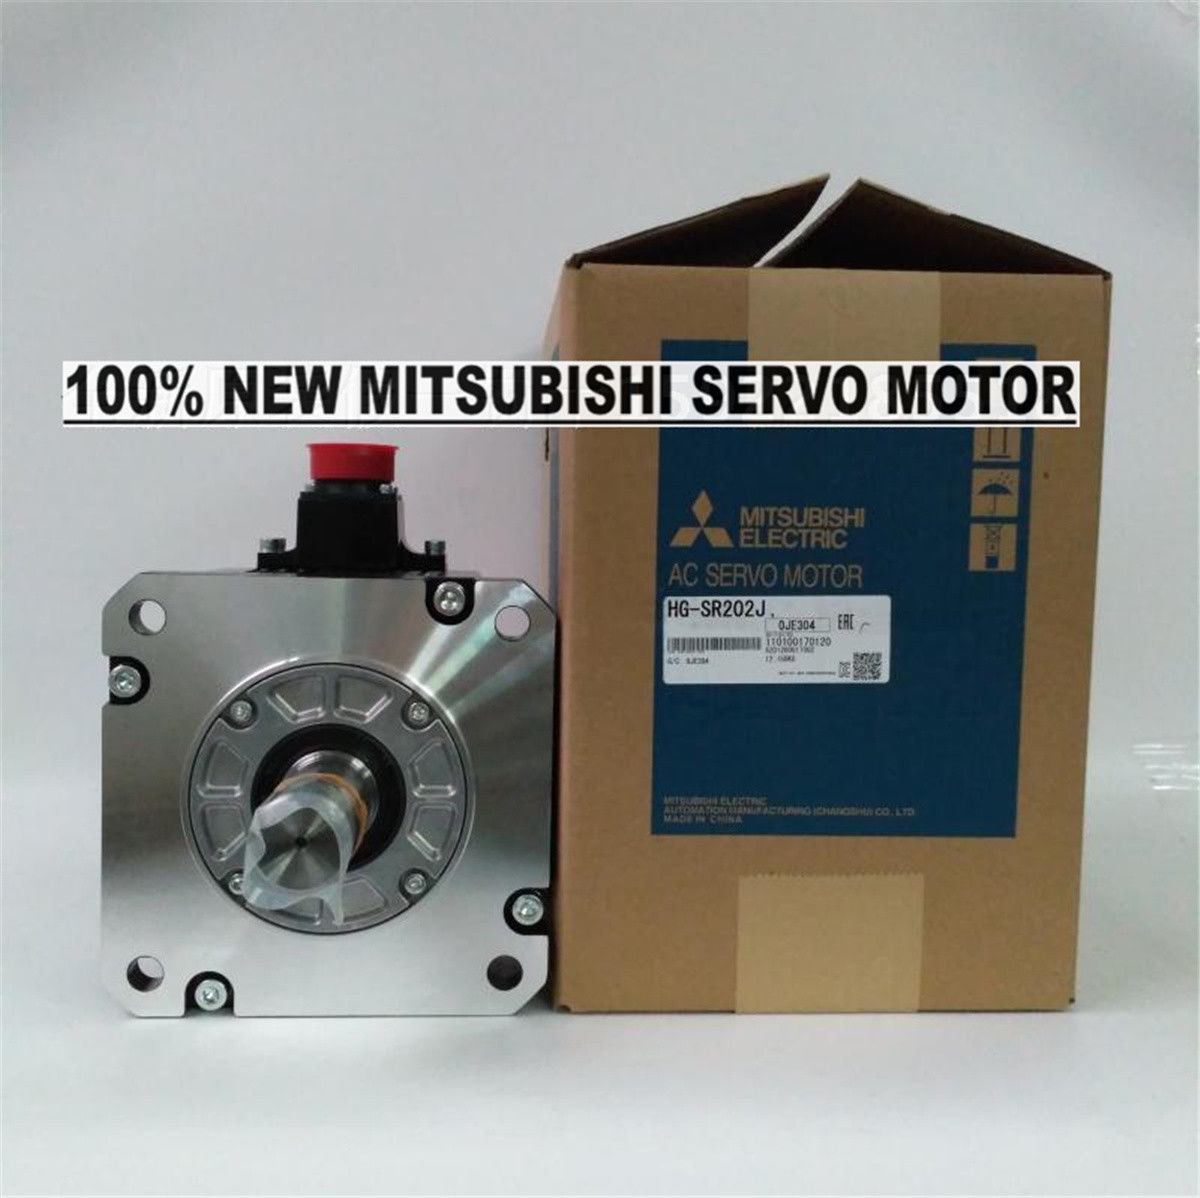 Genuine NEW Mitsubishi Servo Motor HG-SR202J in box HGSR202J